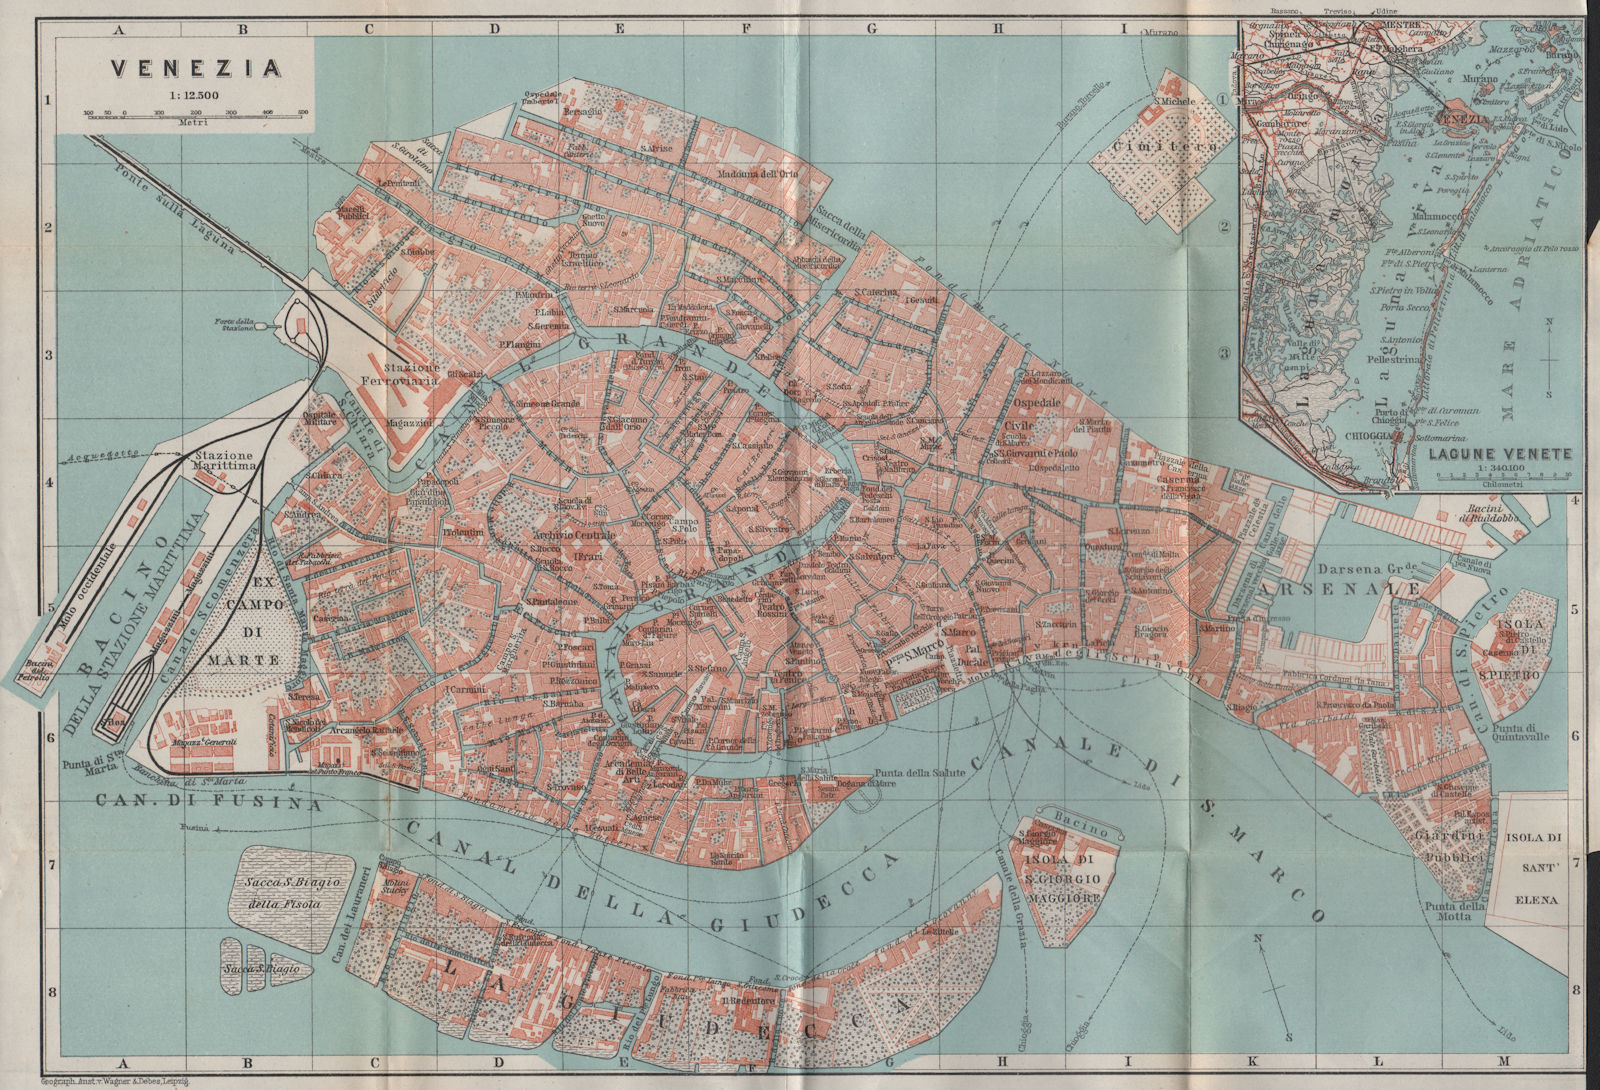 VENEZIA VENICE town city plan. Inset Lagune Venete. Lagoon mappa 1911 old